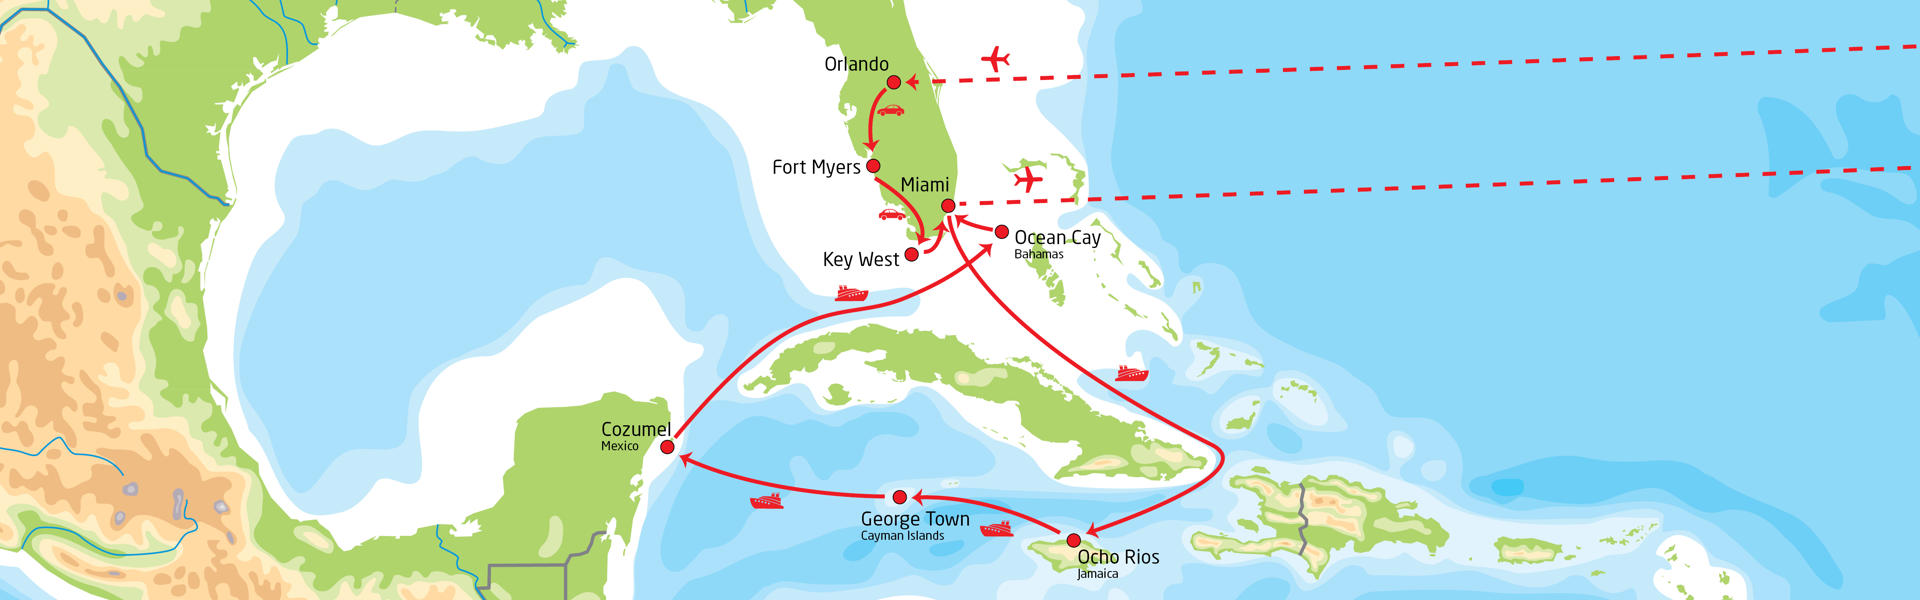 Bilferie Florida Krydstogt Caribien 2021 Caribbean (3)